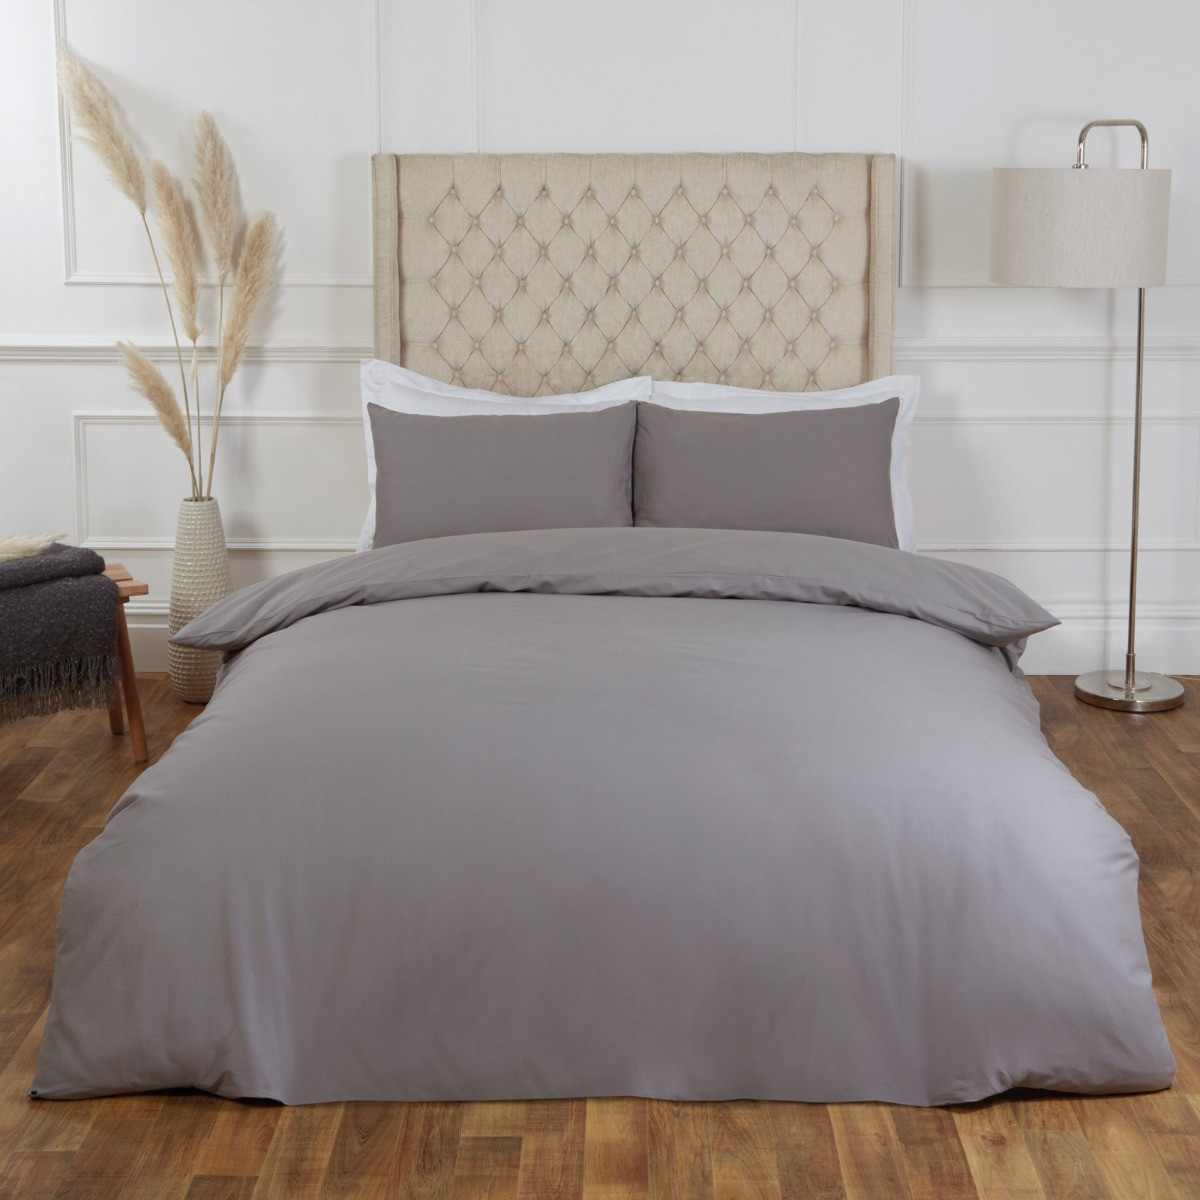 Highams Plain 100% Cotton Duvet Cover with Pillow Case Bedding Set, Grey - Double>